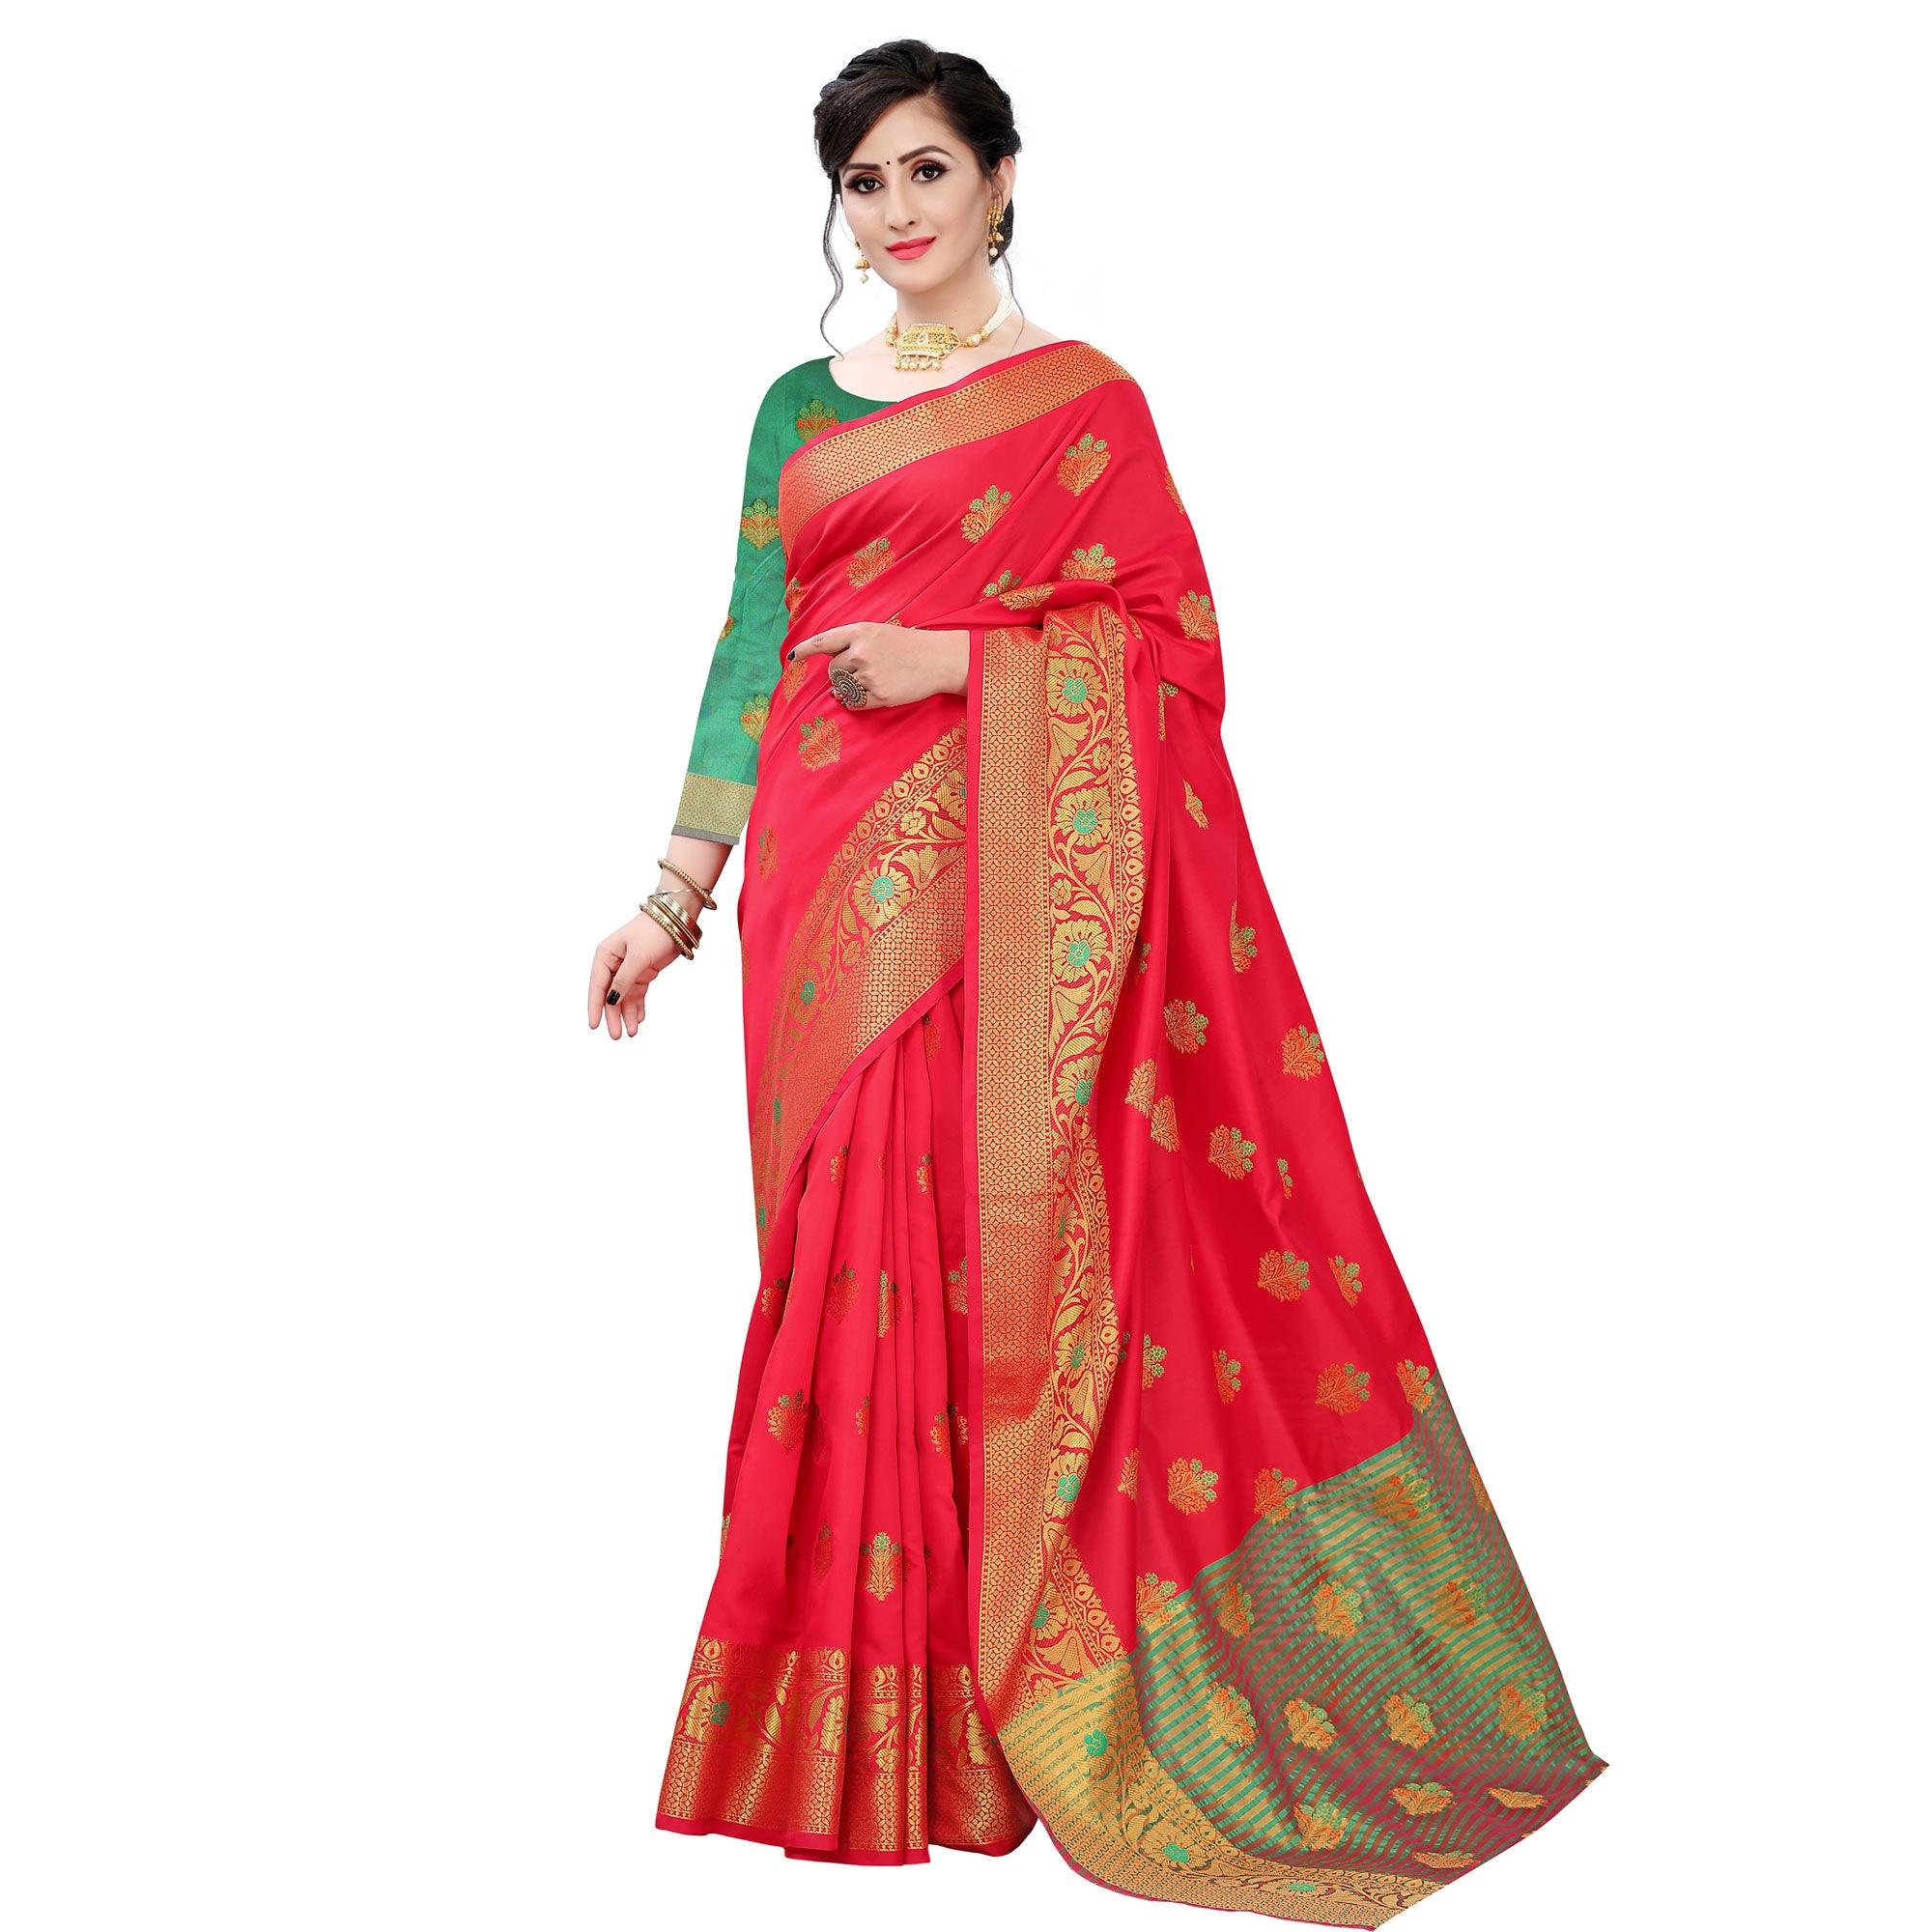 Gorgeous Red Colored Beautiful Jacqaurd Floral Pattern Festive Wear Art Silk Saree - Peachmode